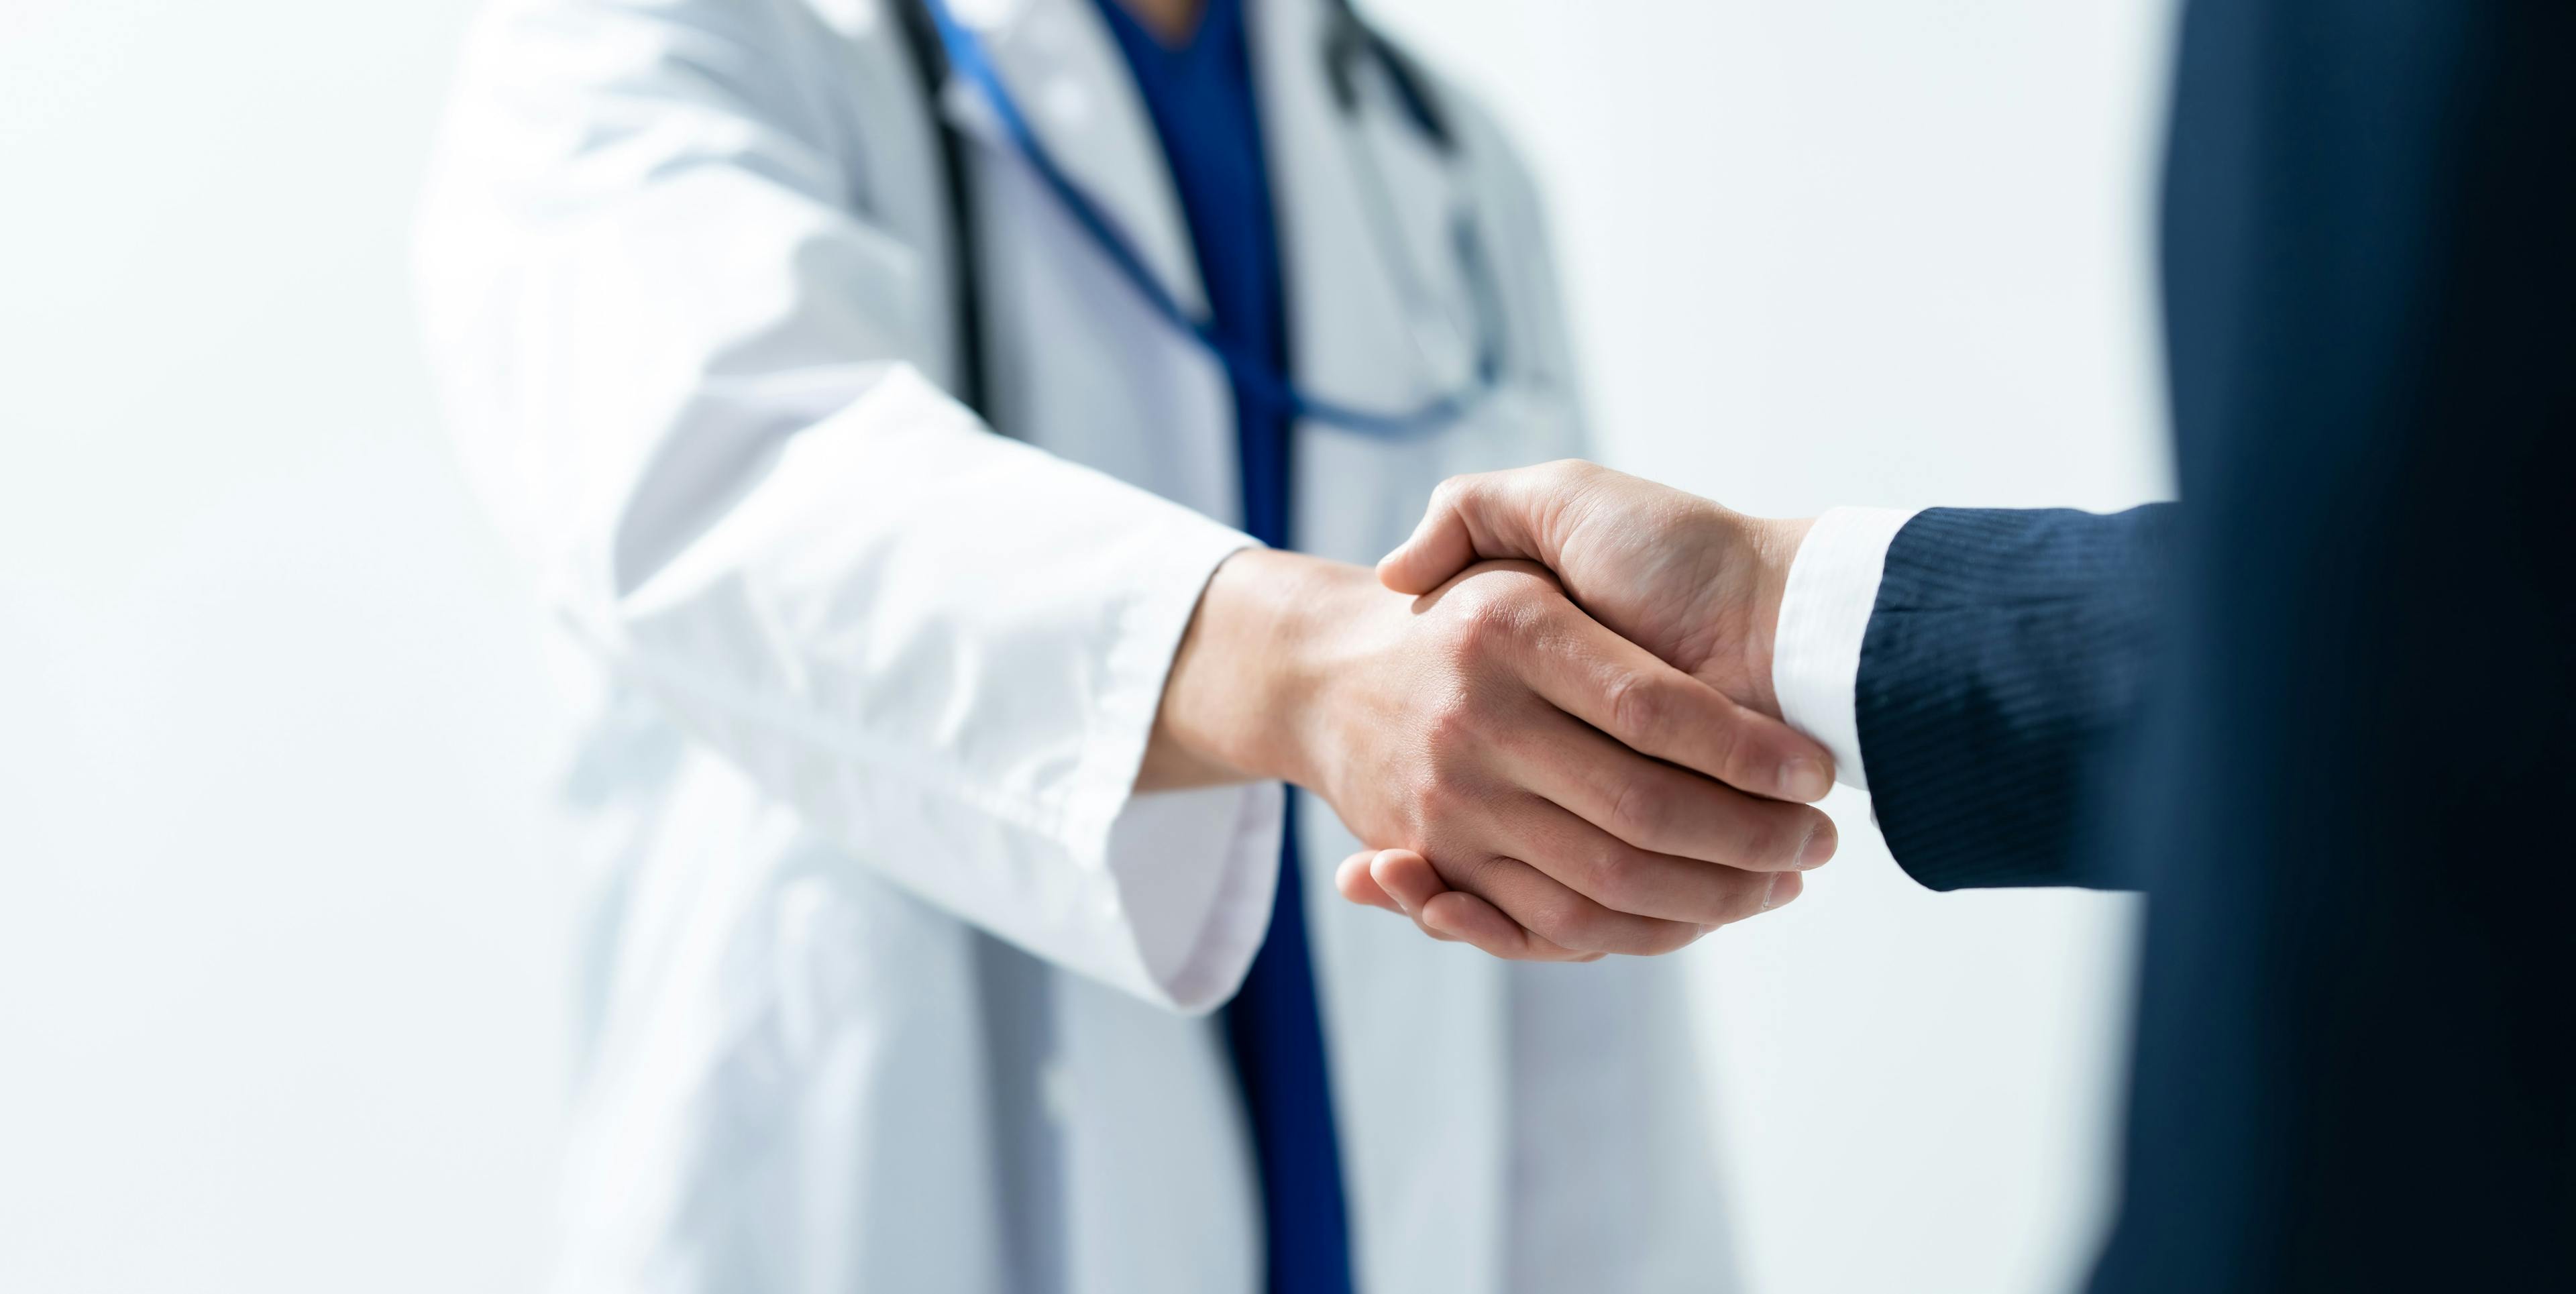 doctor and businessman shaking hands | image credit: naka – stock.adobe.com